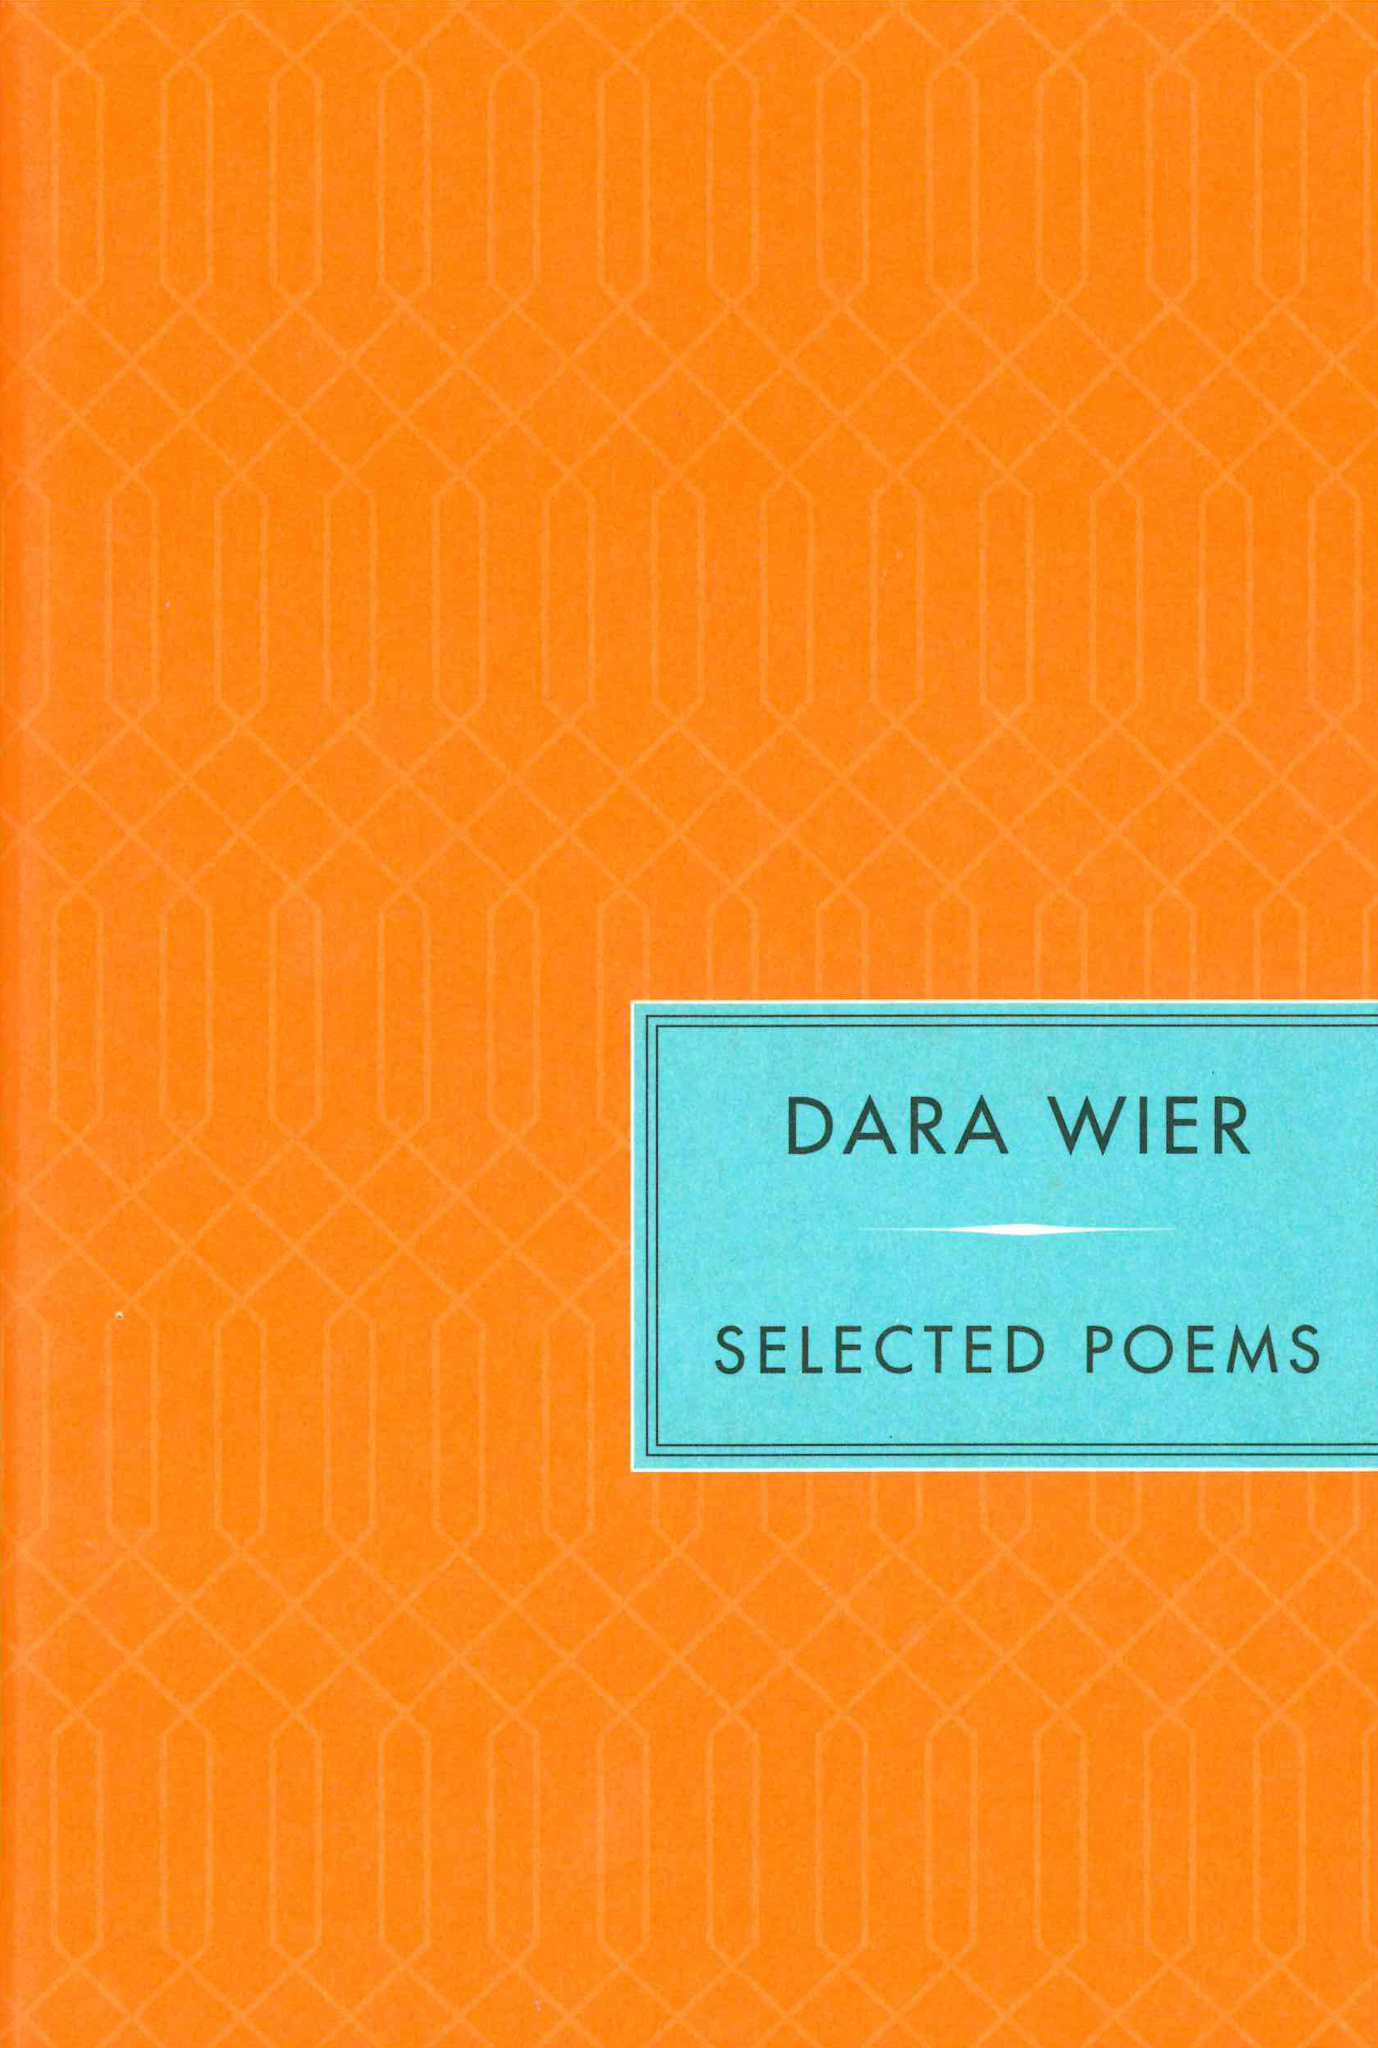 Dara Wier: Selected Poems (Hardcover)